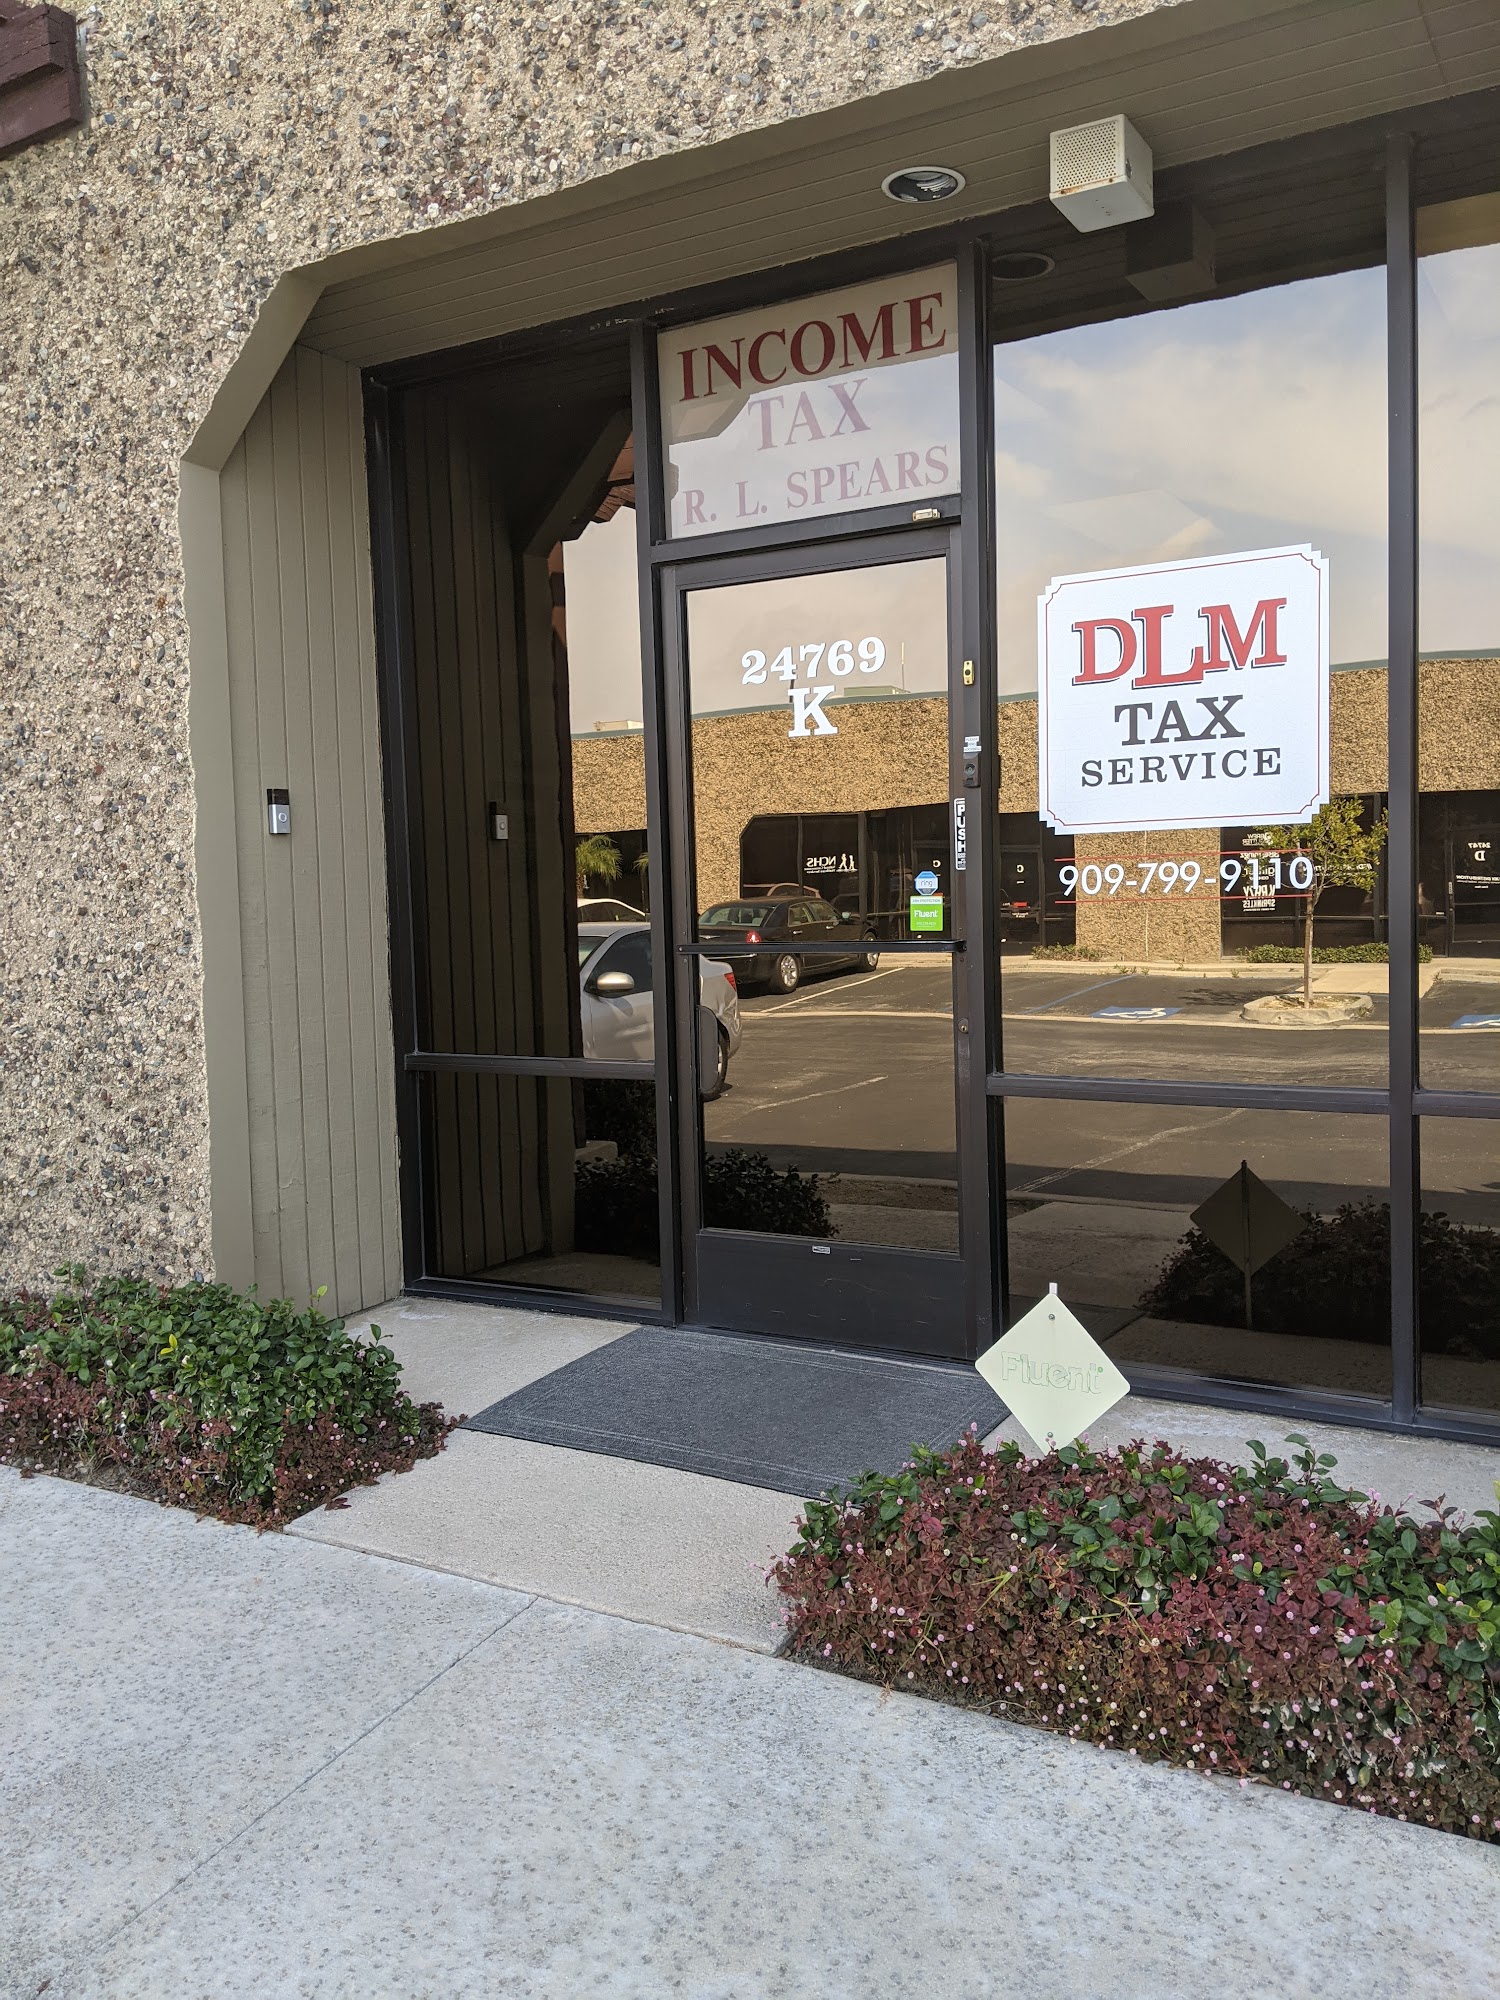 DLM Tax Services